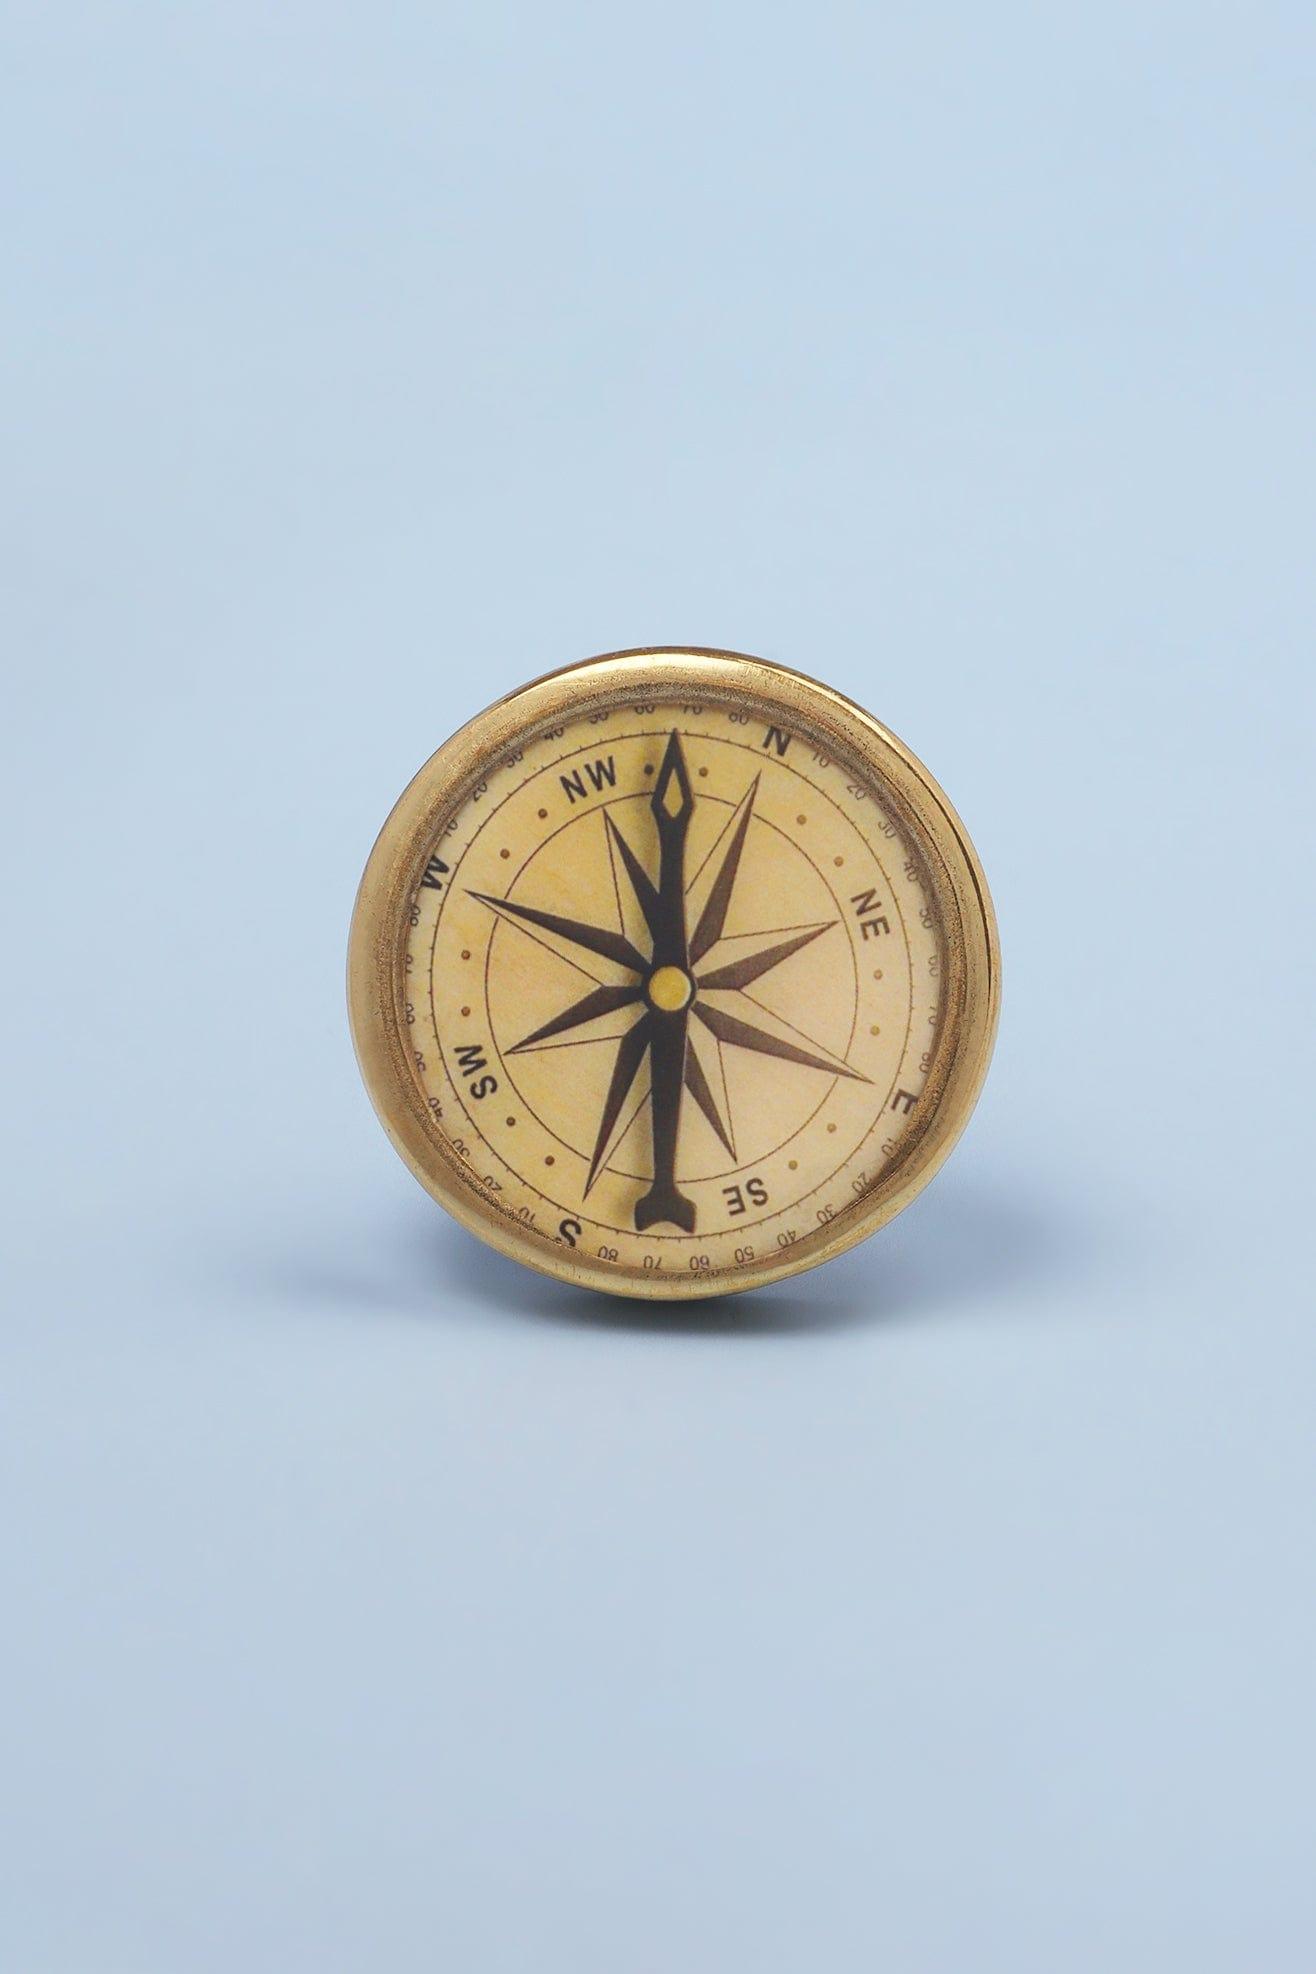 G Decor Door Knobs & Handles Compass Brass Round Circular Detailed Pull Knobs